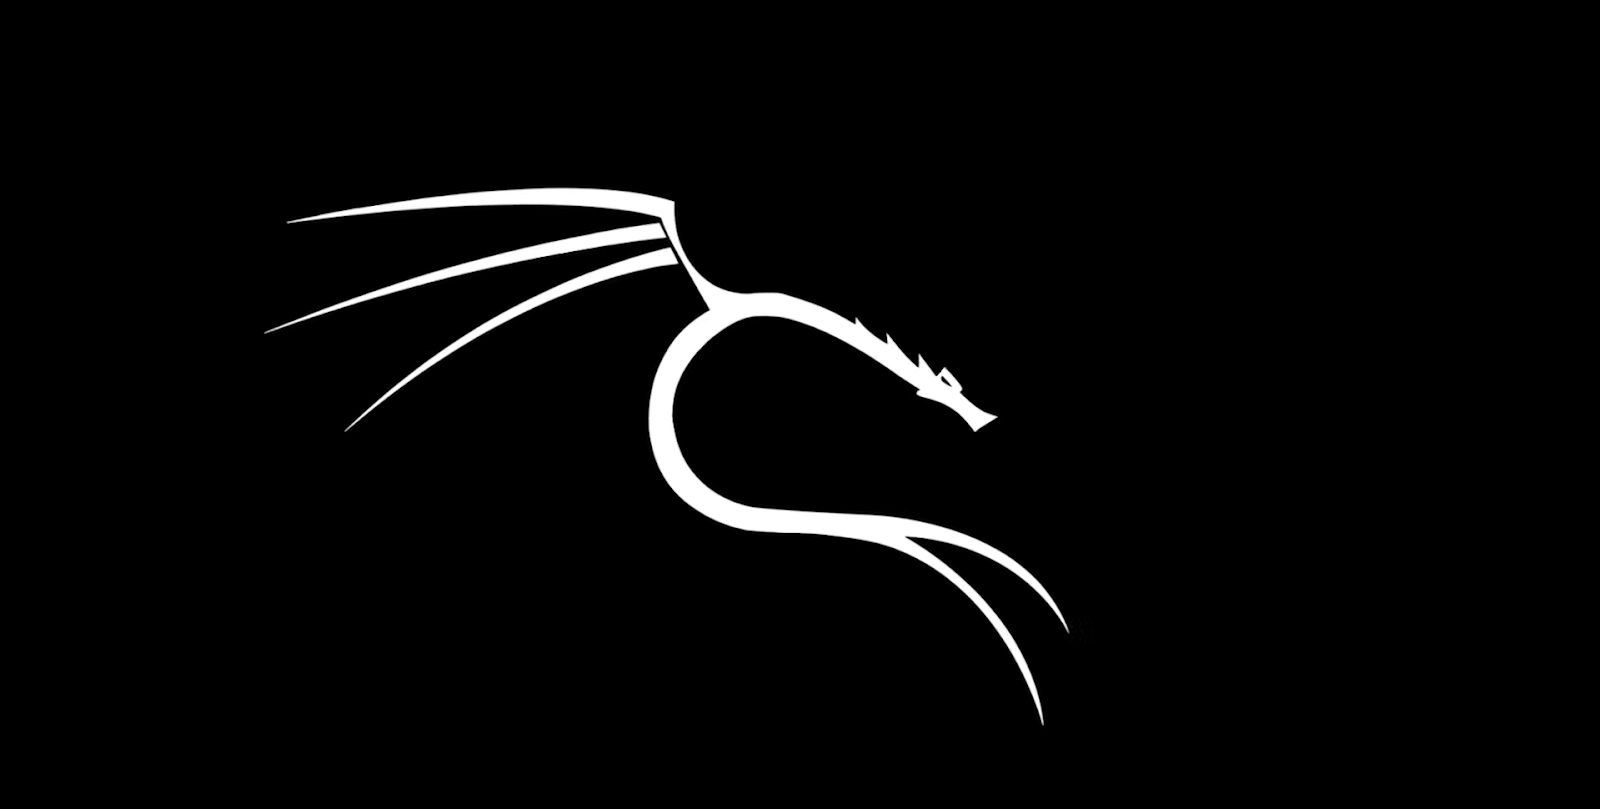 A minimalist white dragon silhouette on a black background.